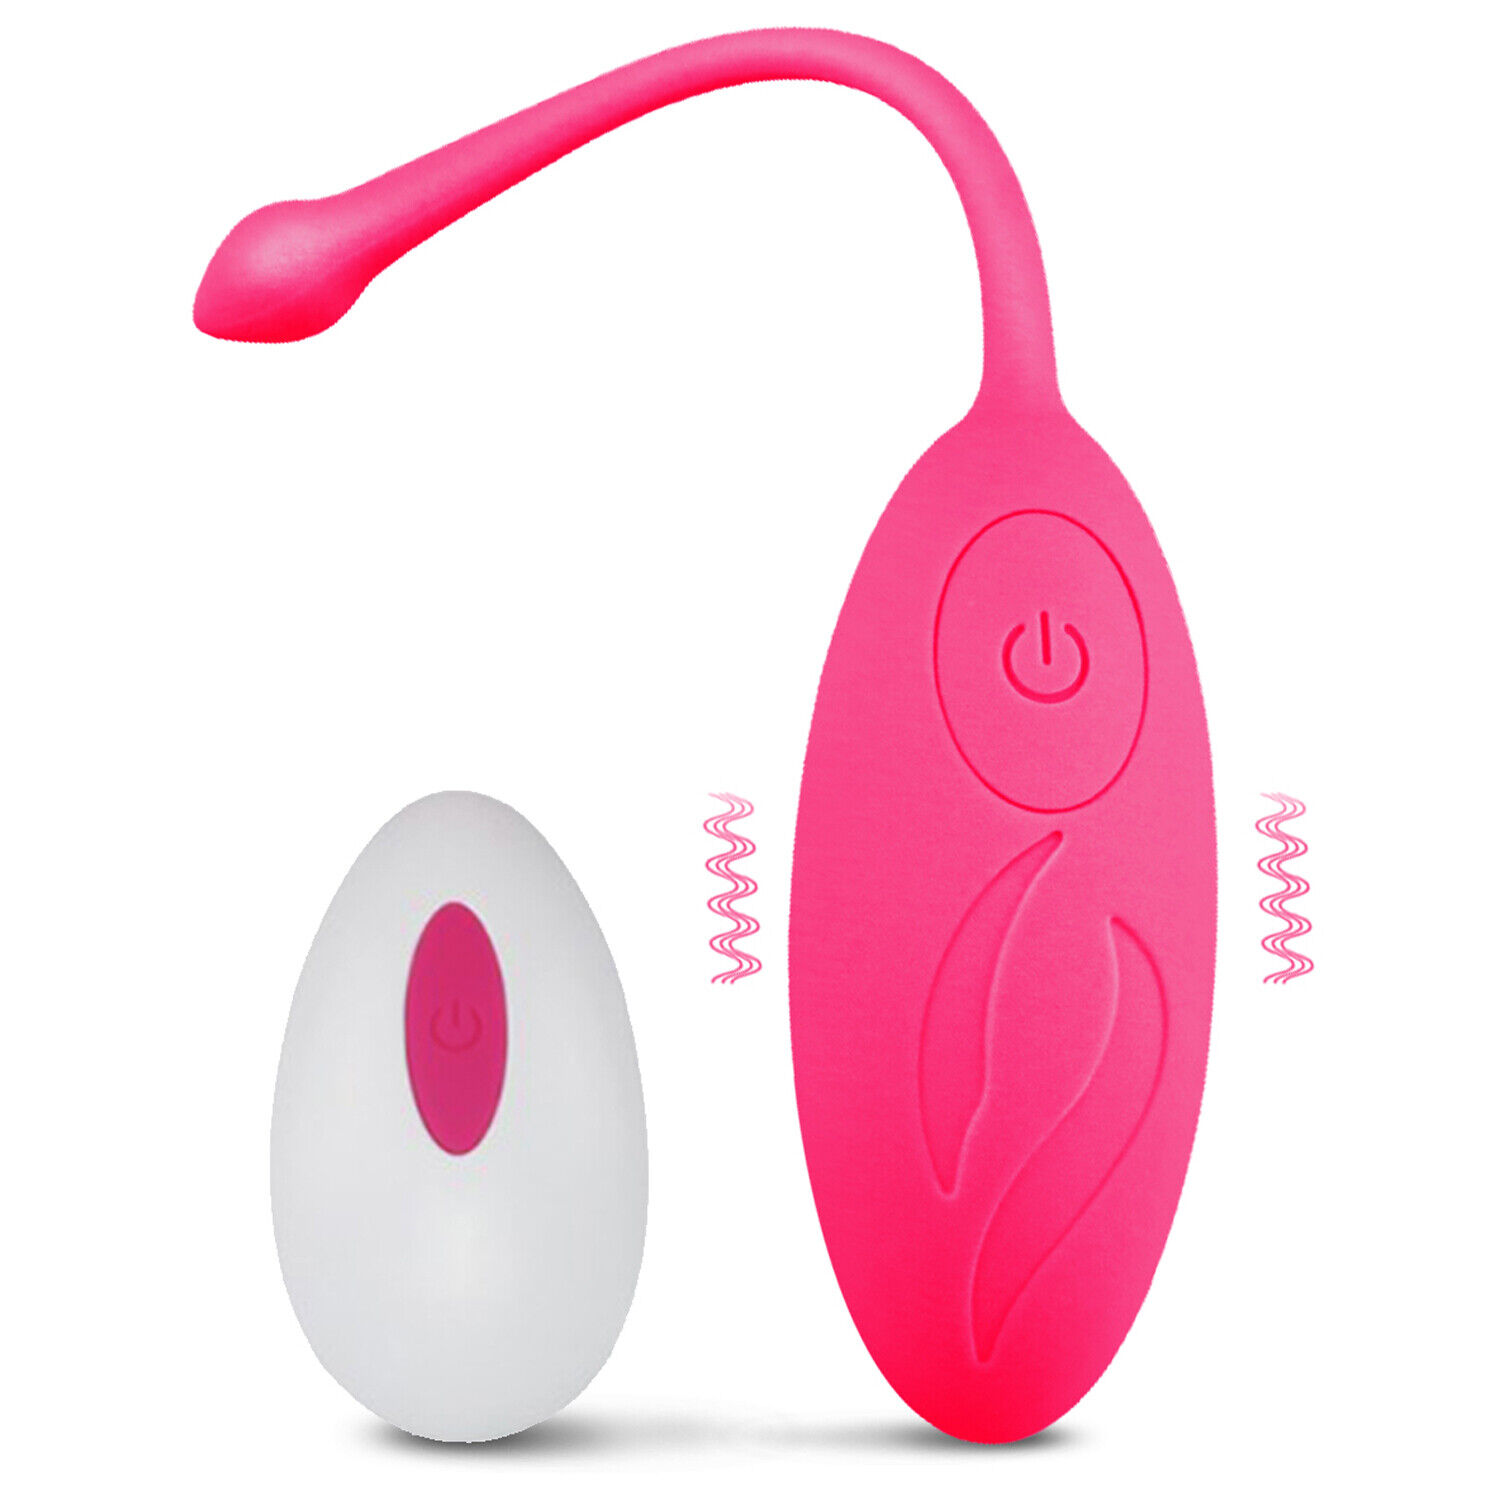 Wireless Remote Control Bullet Egg Vibrator G-Spot Dildo Adult Sex Toys Women eBay hq image